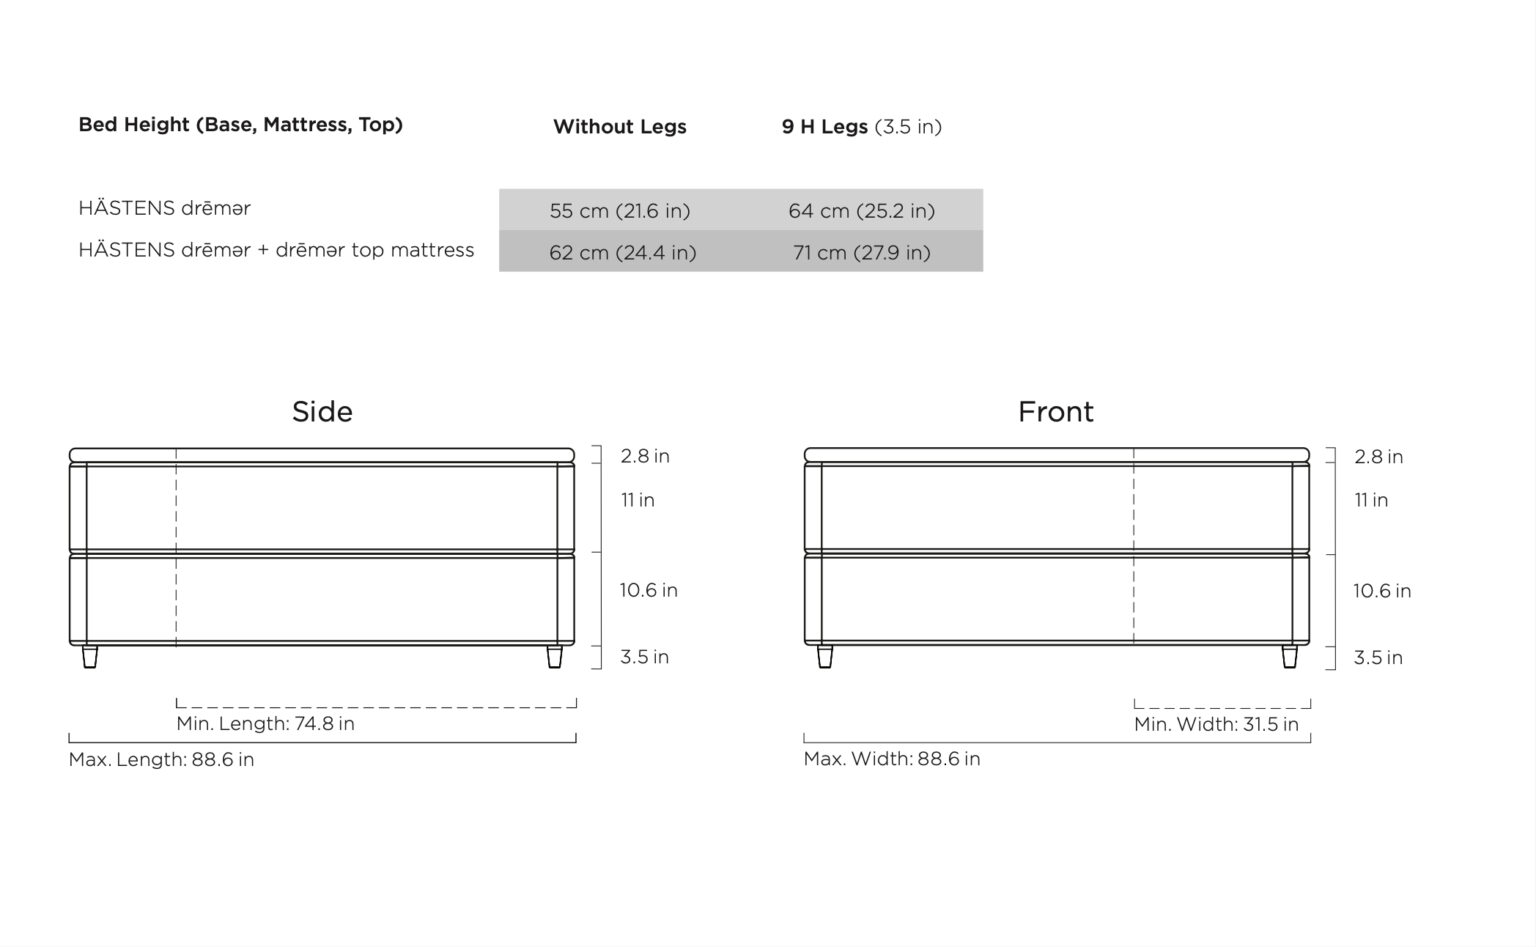 Dremer_mattress-product-sheet-dimensions_hastens